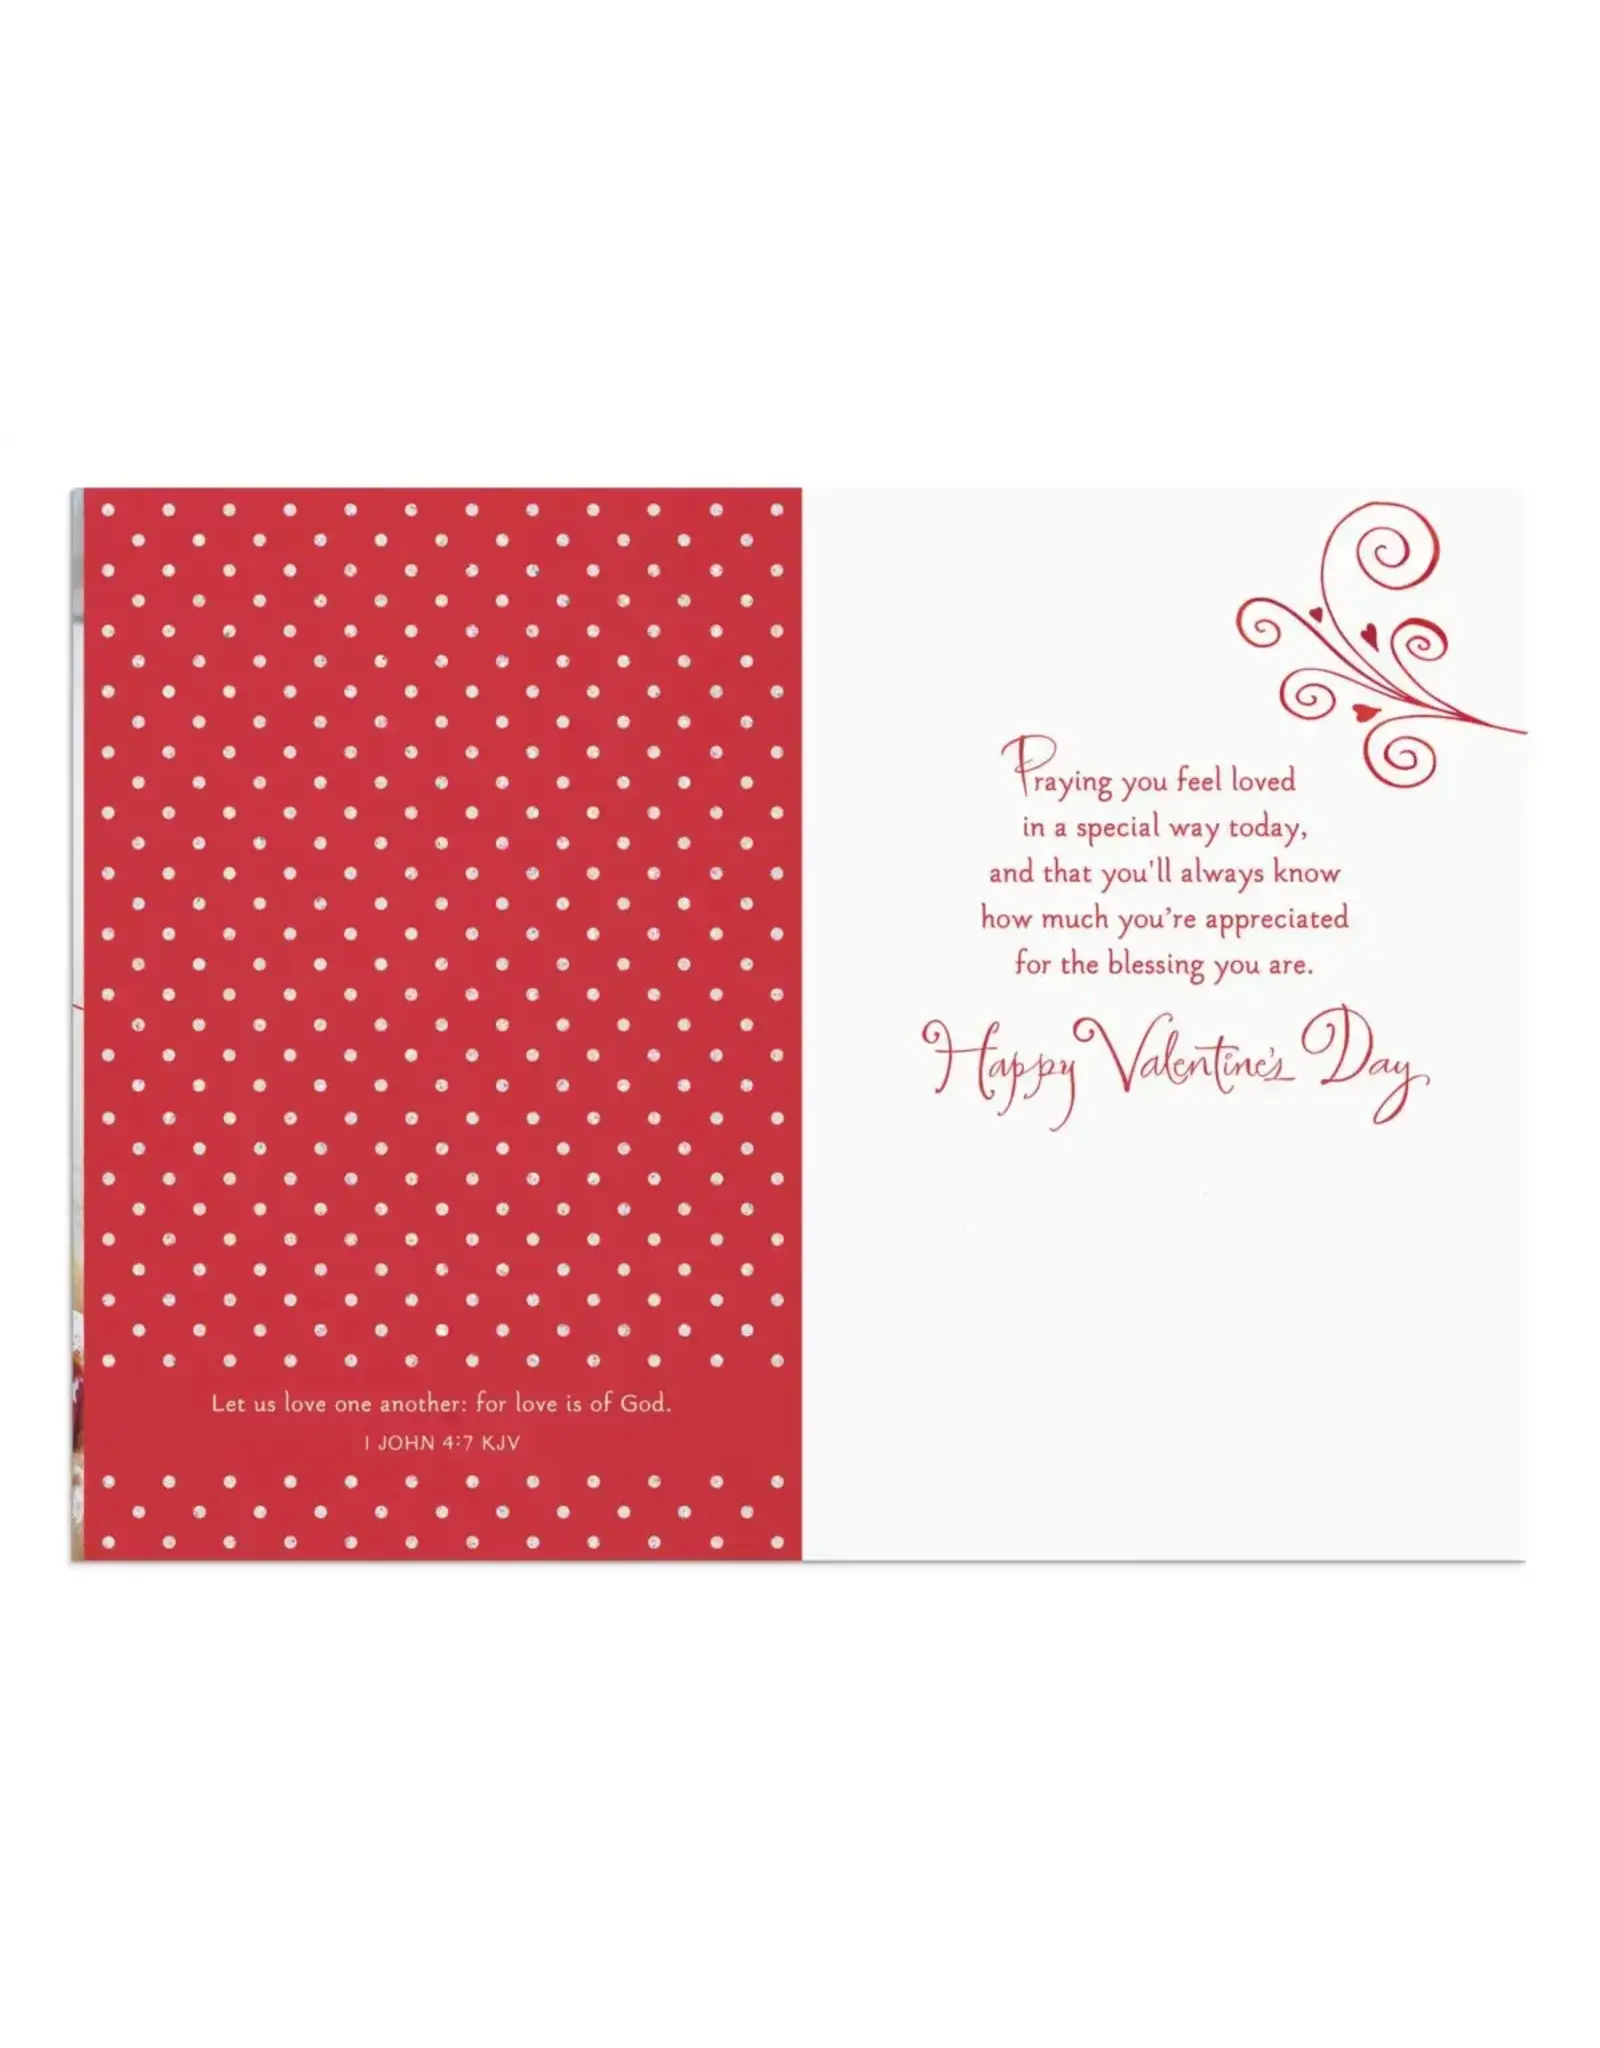 Dayspring Valentine's Day Card (Anyone) - God's Goodness